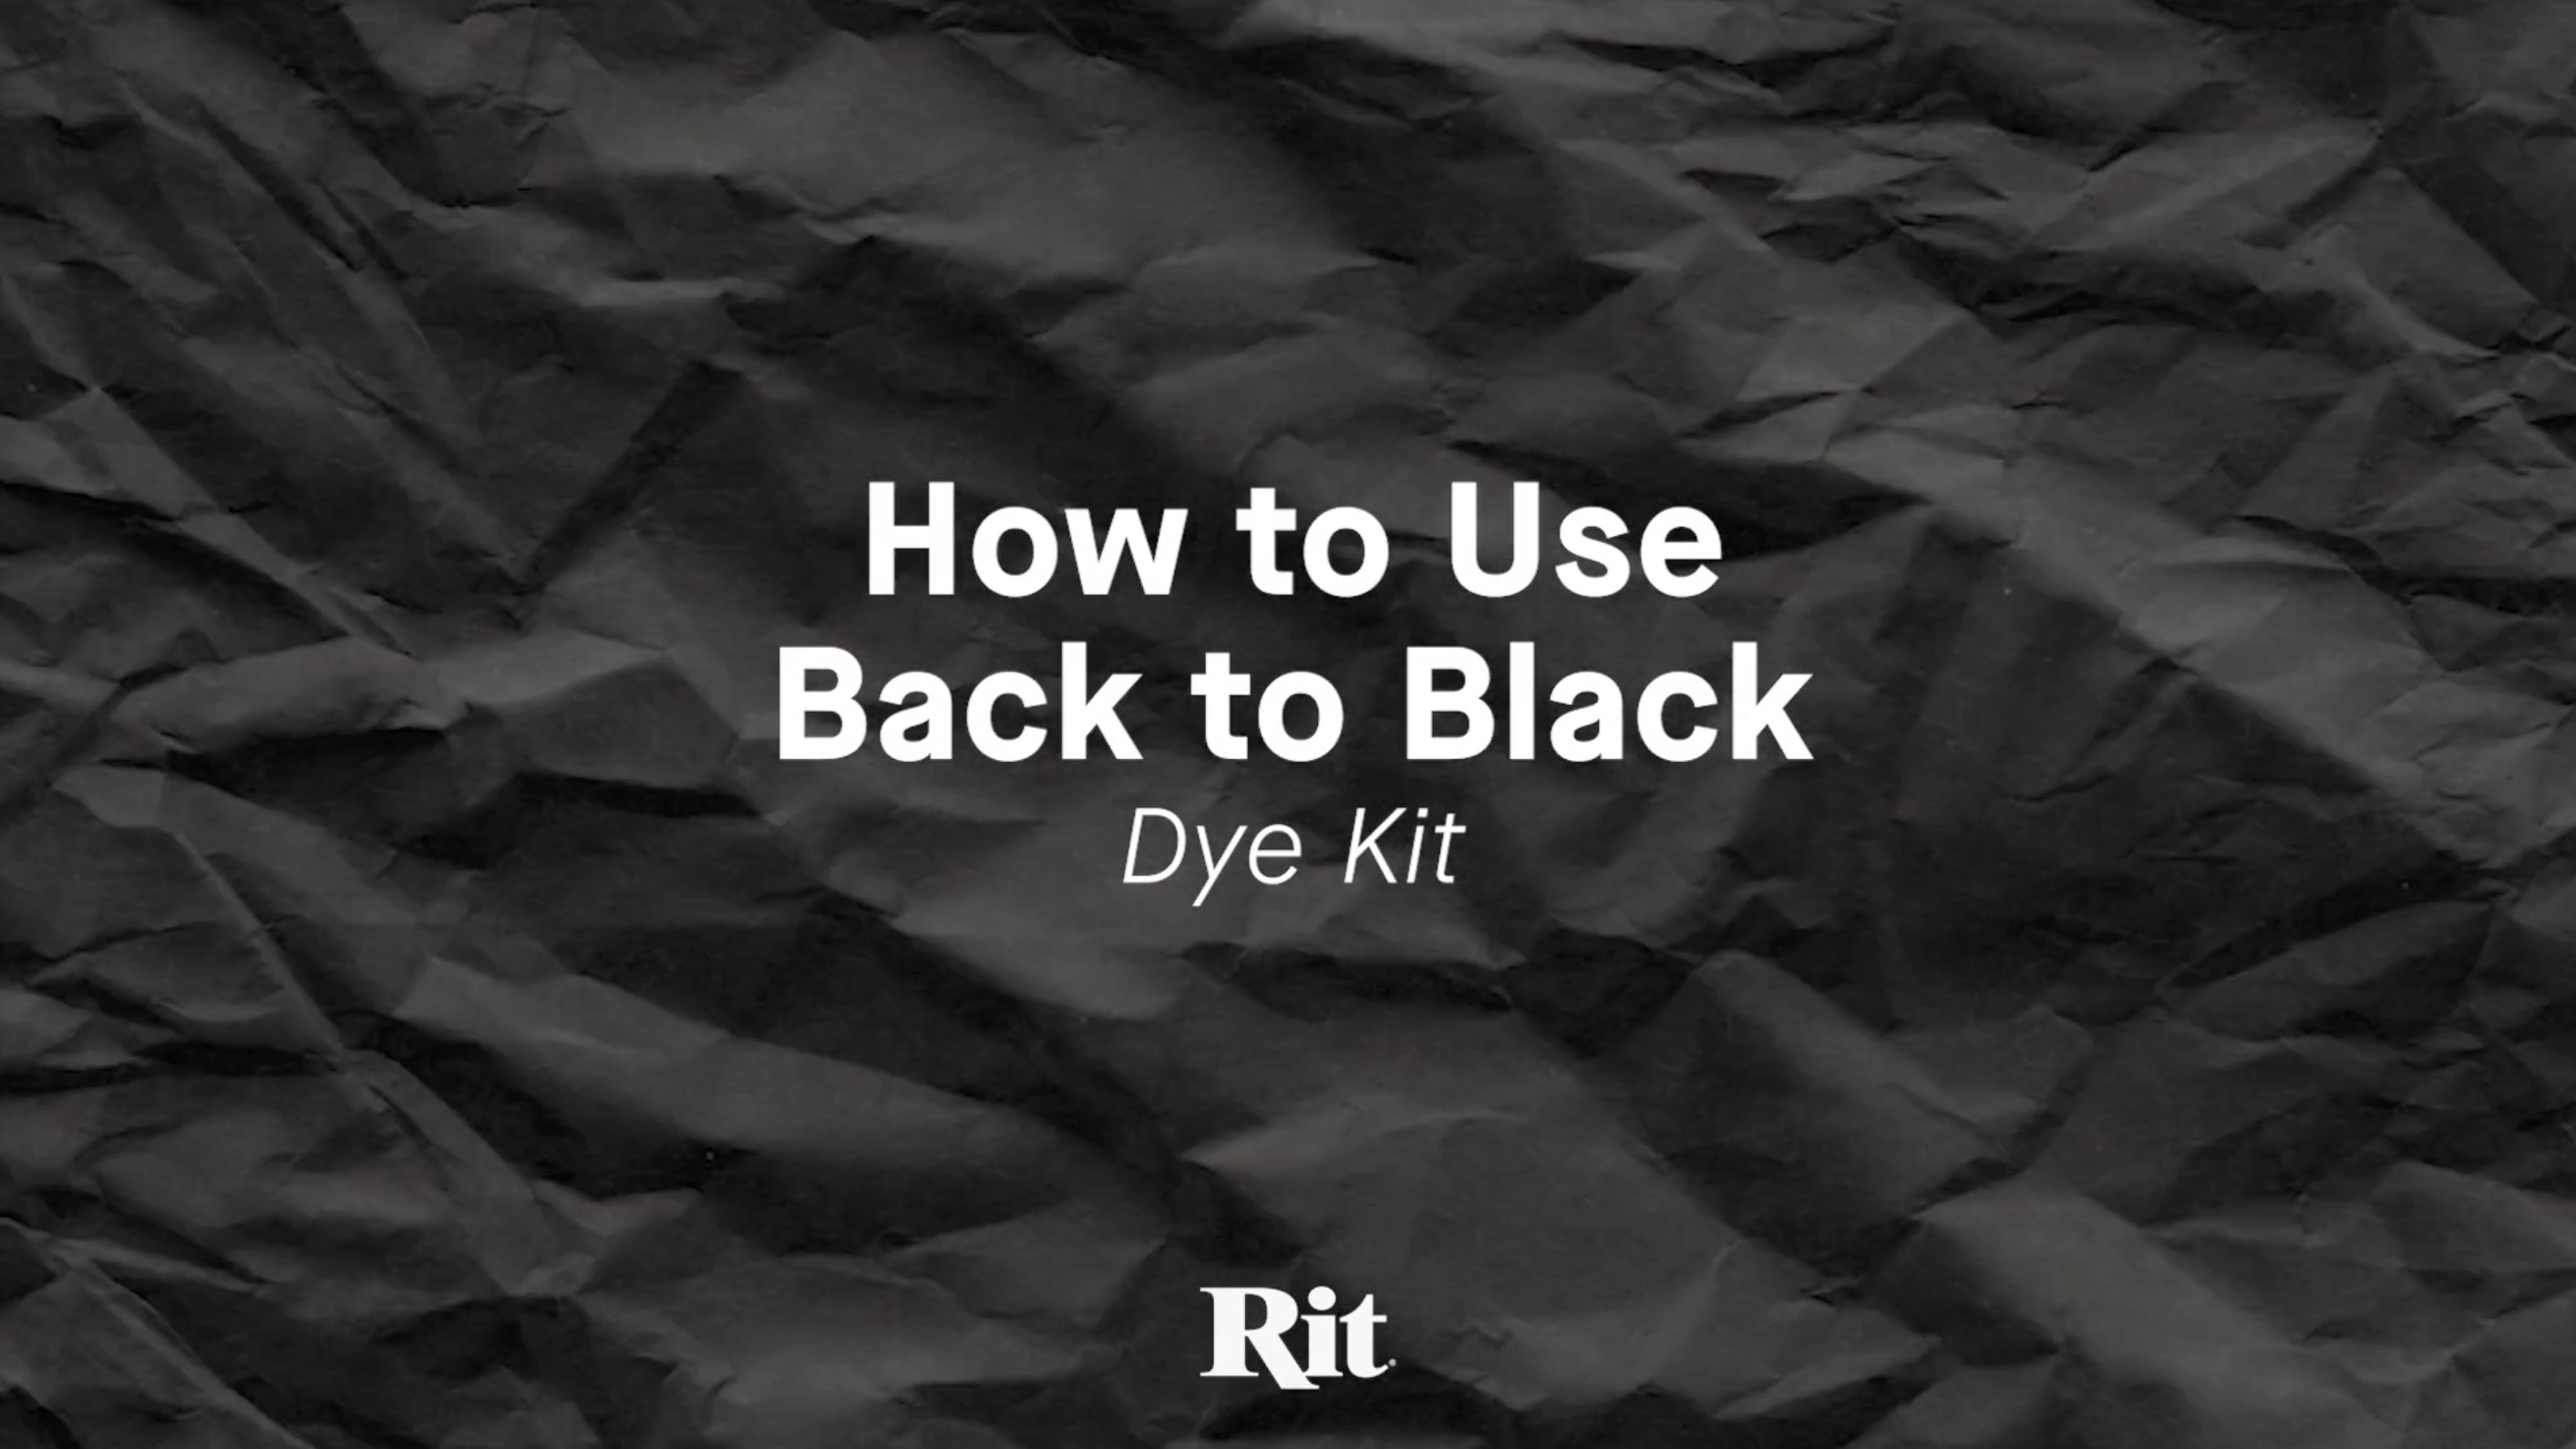 Rit Back to Black Fabric Dye Kit